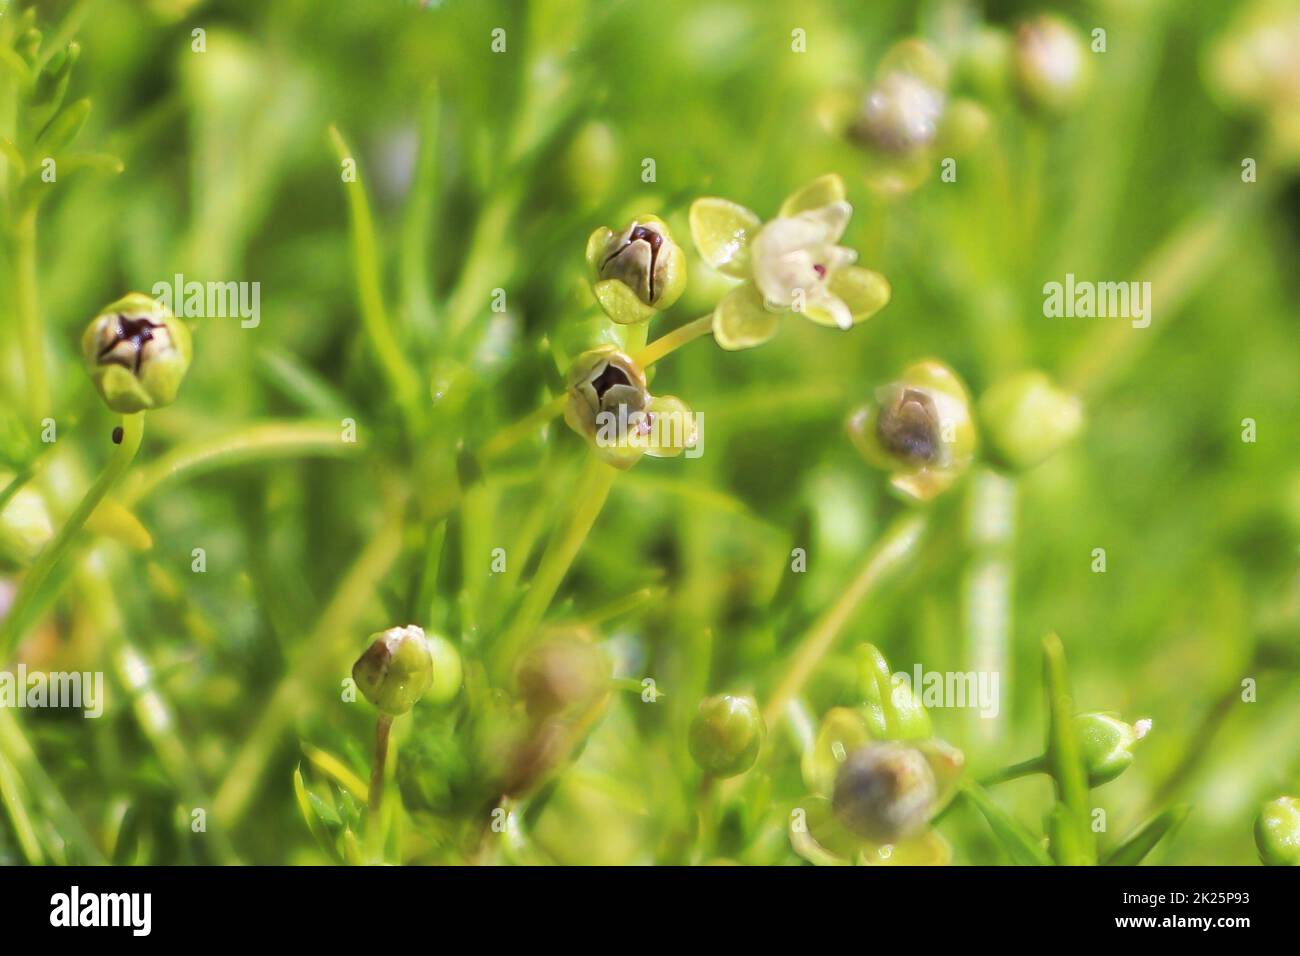 Macro view of delicate flowers on Irish Moss Stock Photo